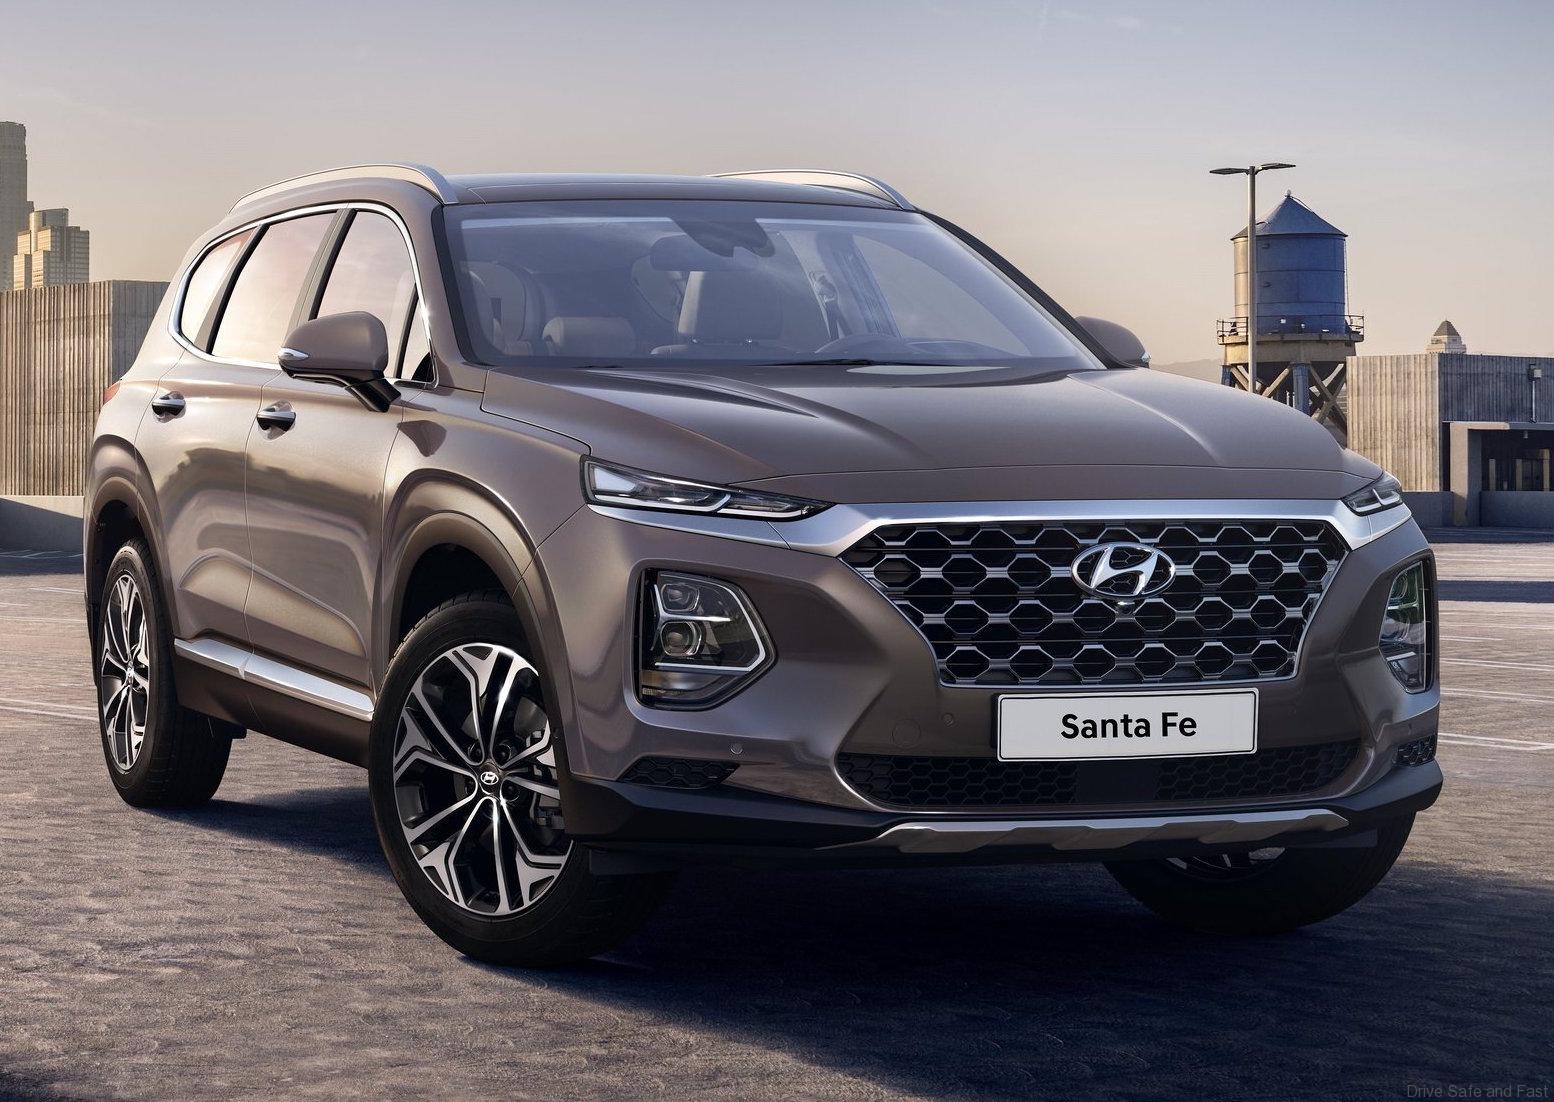 Hyundai Santa Fe all new 2018 model uncovered